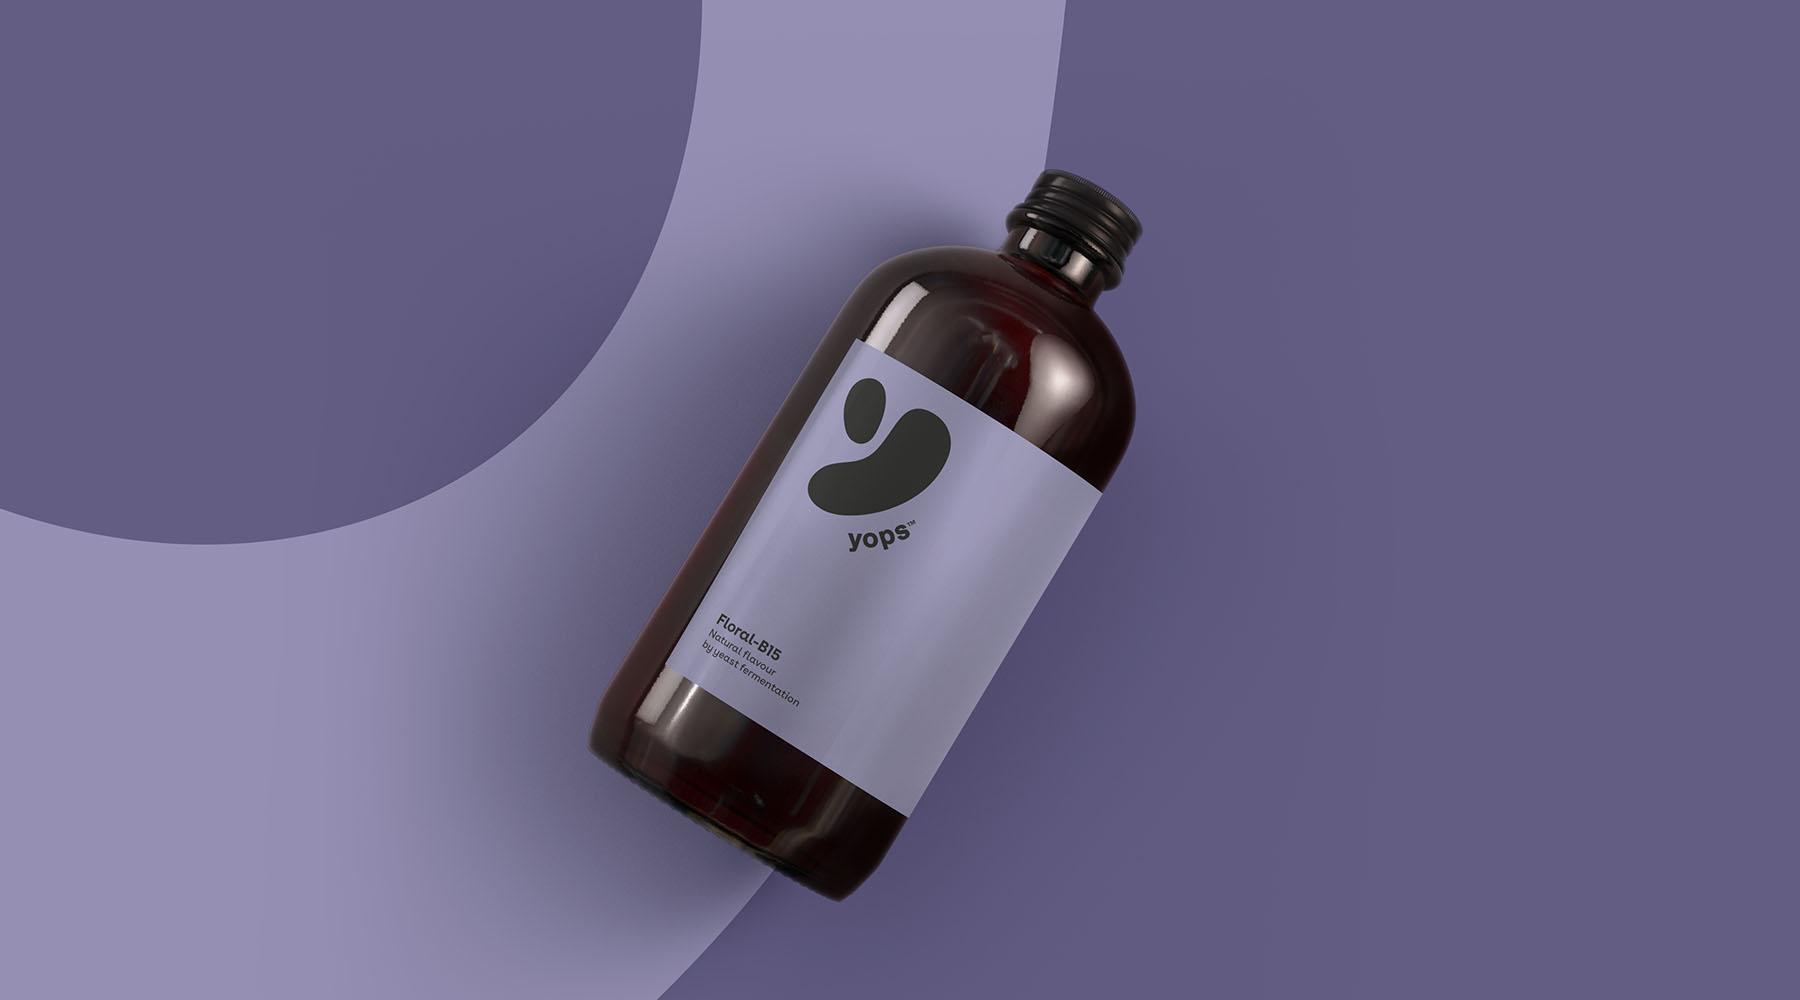 Yops bottle design in purple on background with watermark 